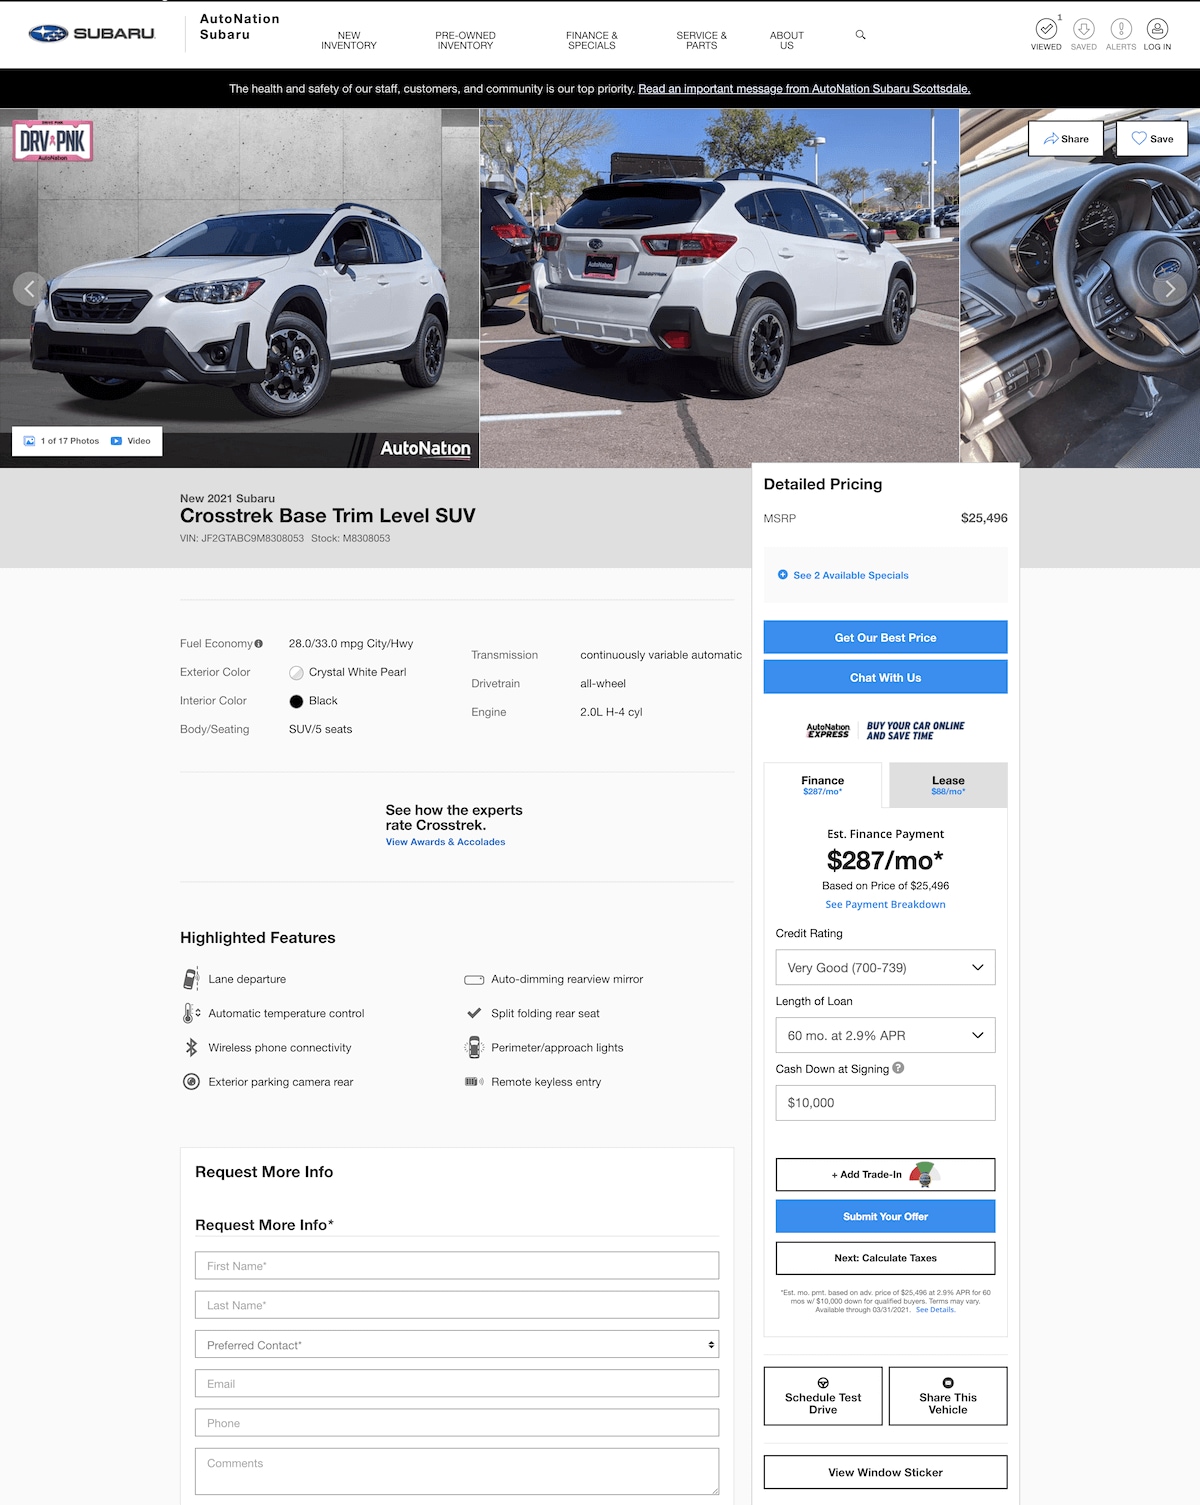 AutoNation Subaru Hilton Head vehicle details page